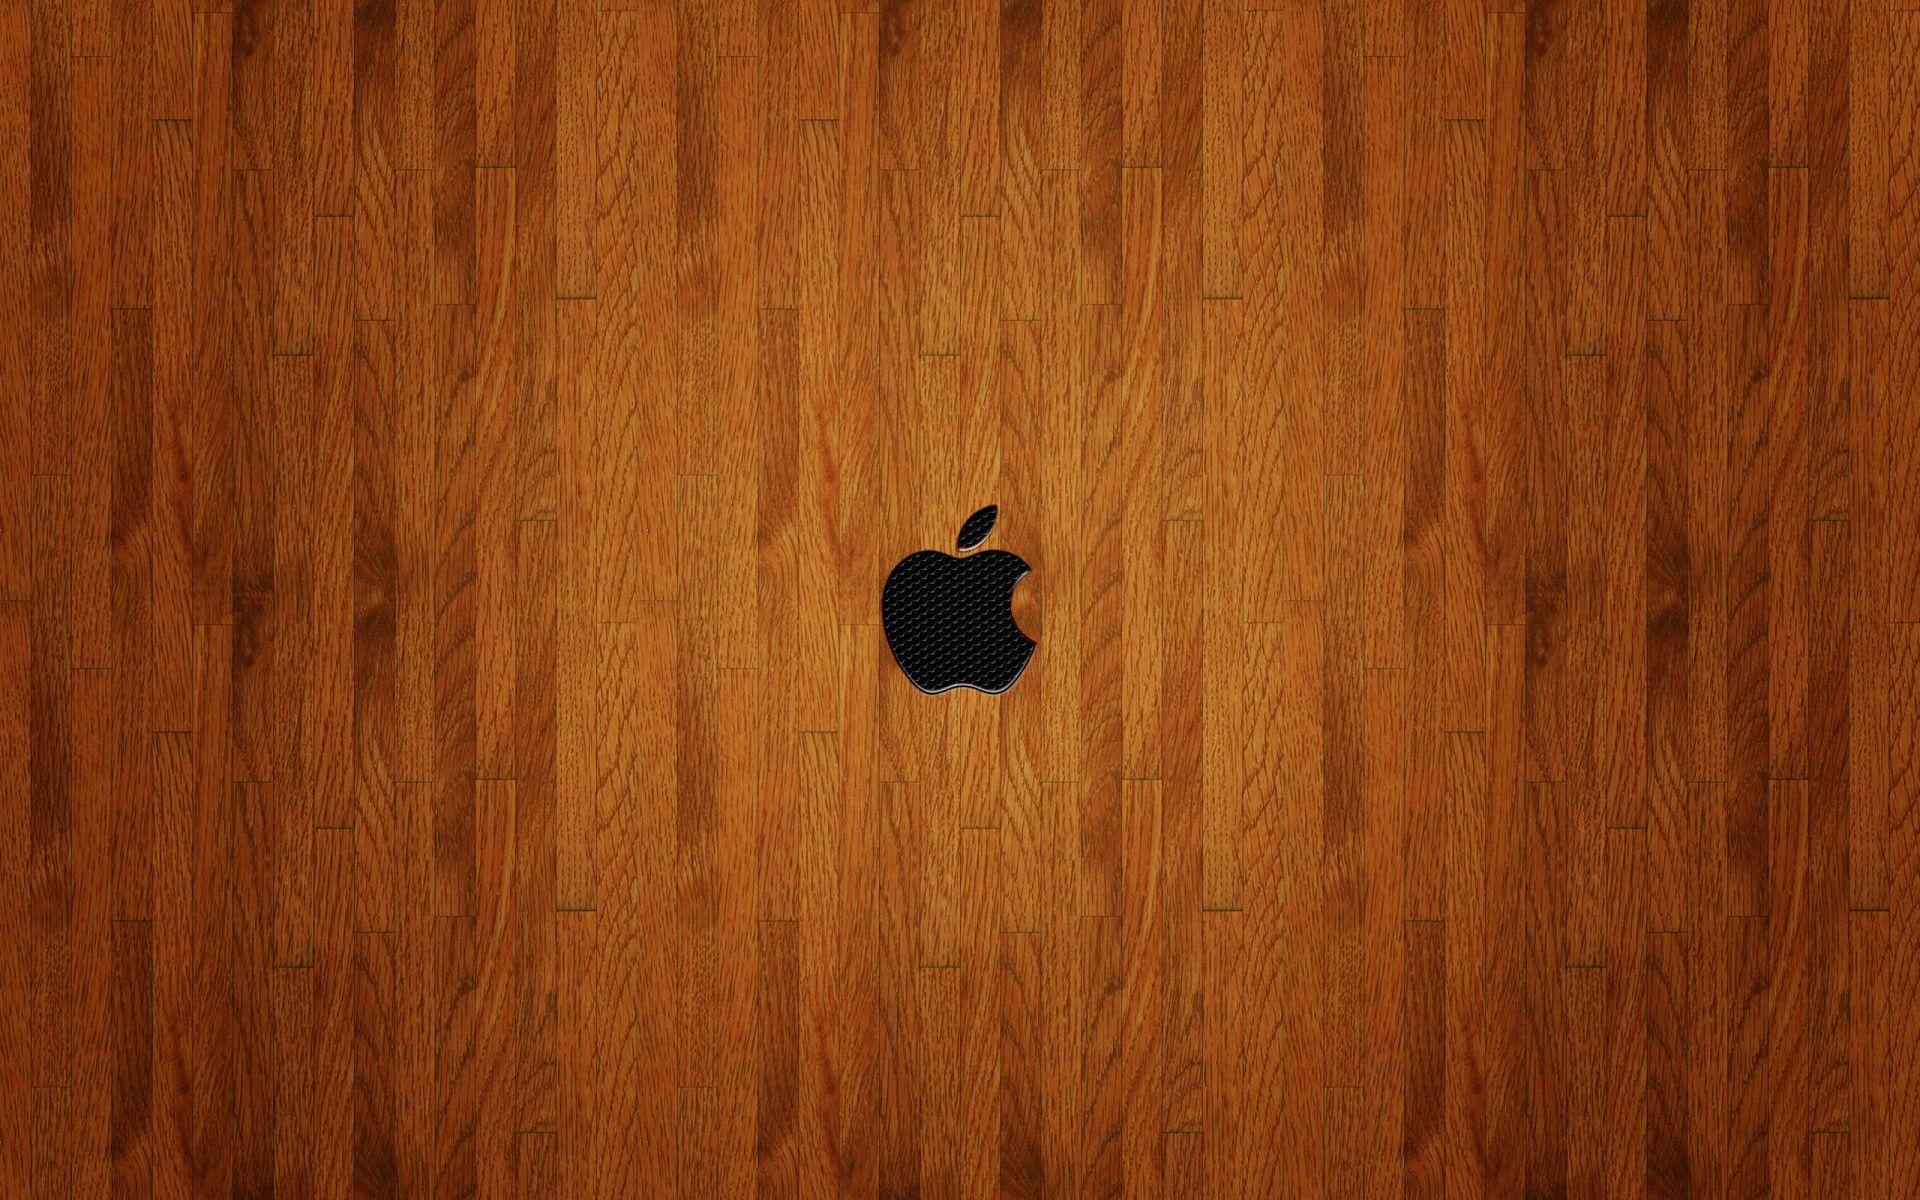 Apple Logo Wallpaper, High Definition Wallpaper, Free Apple